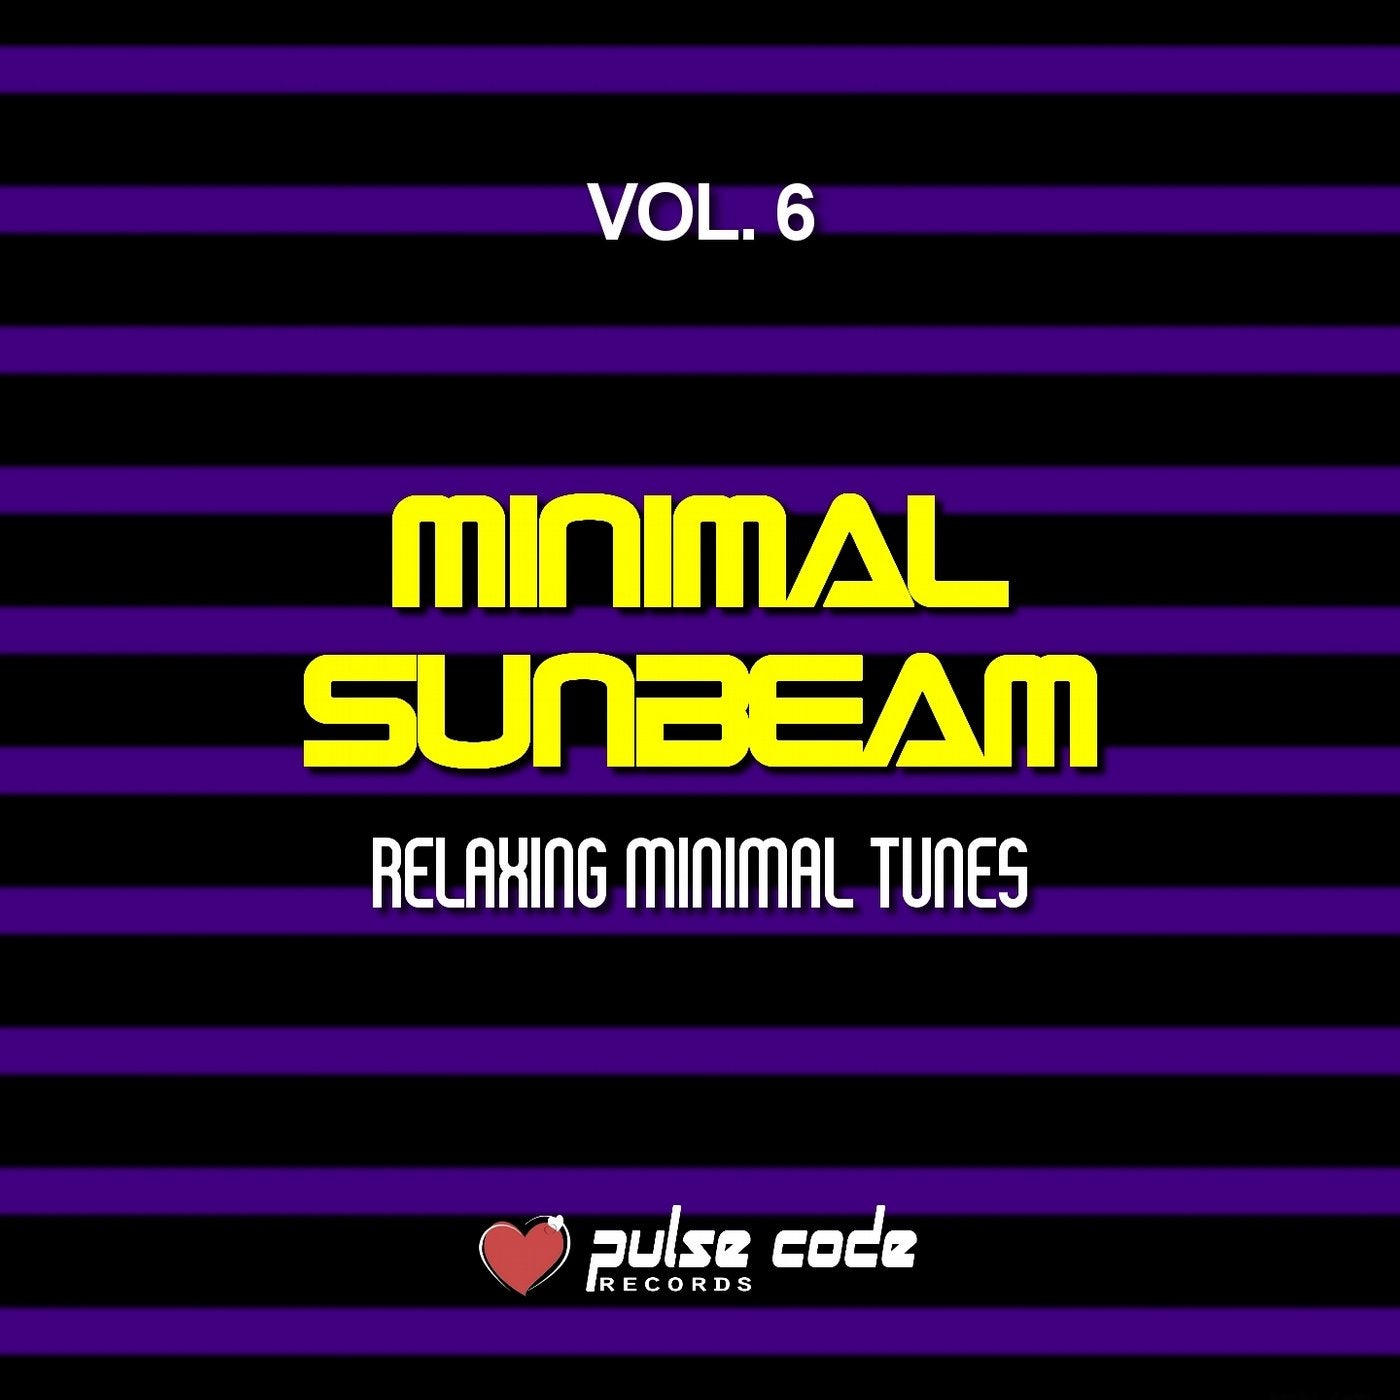 Minimal Sunbeam, Vol. 6 (Relaxing Minimal Tunes)